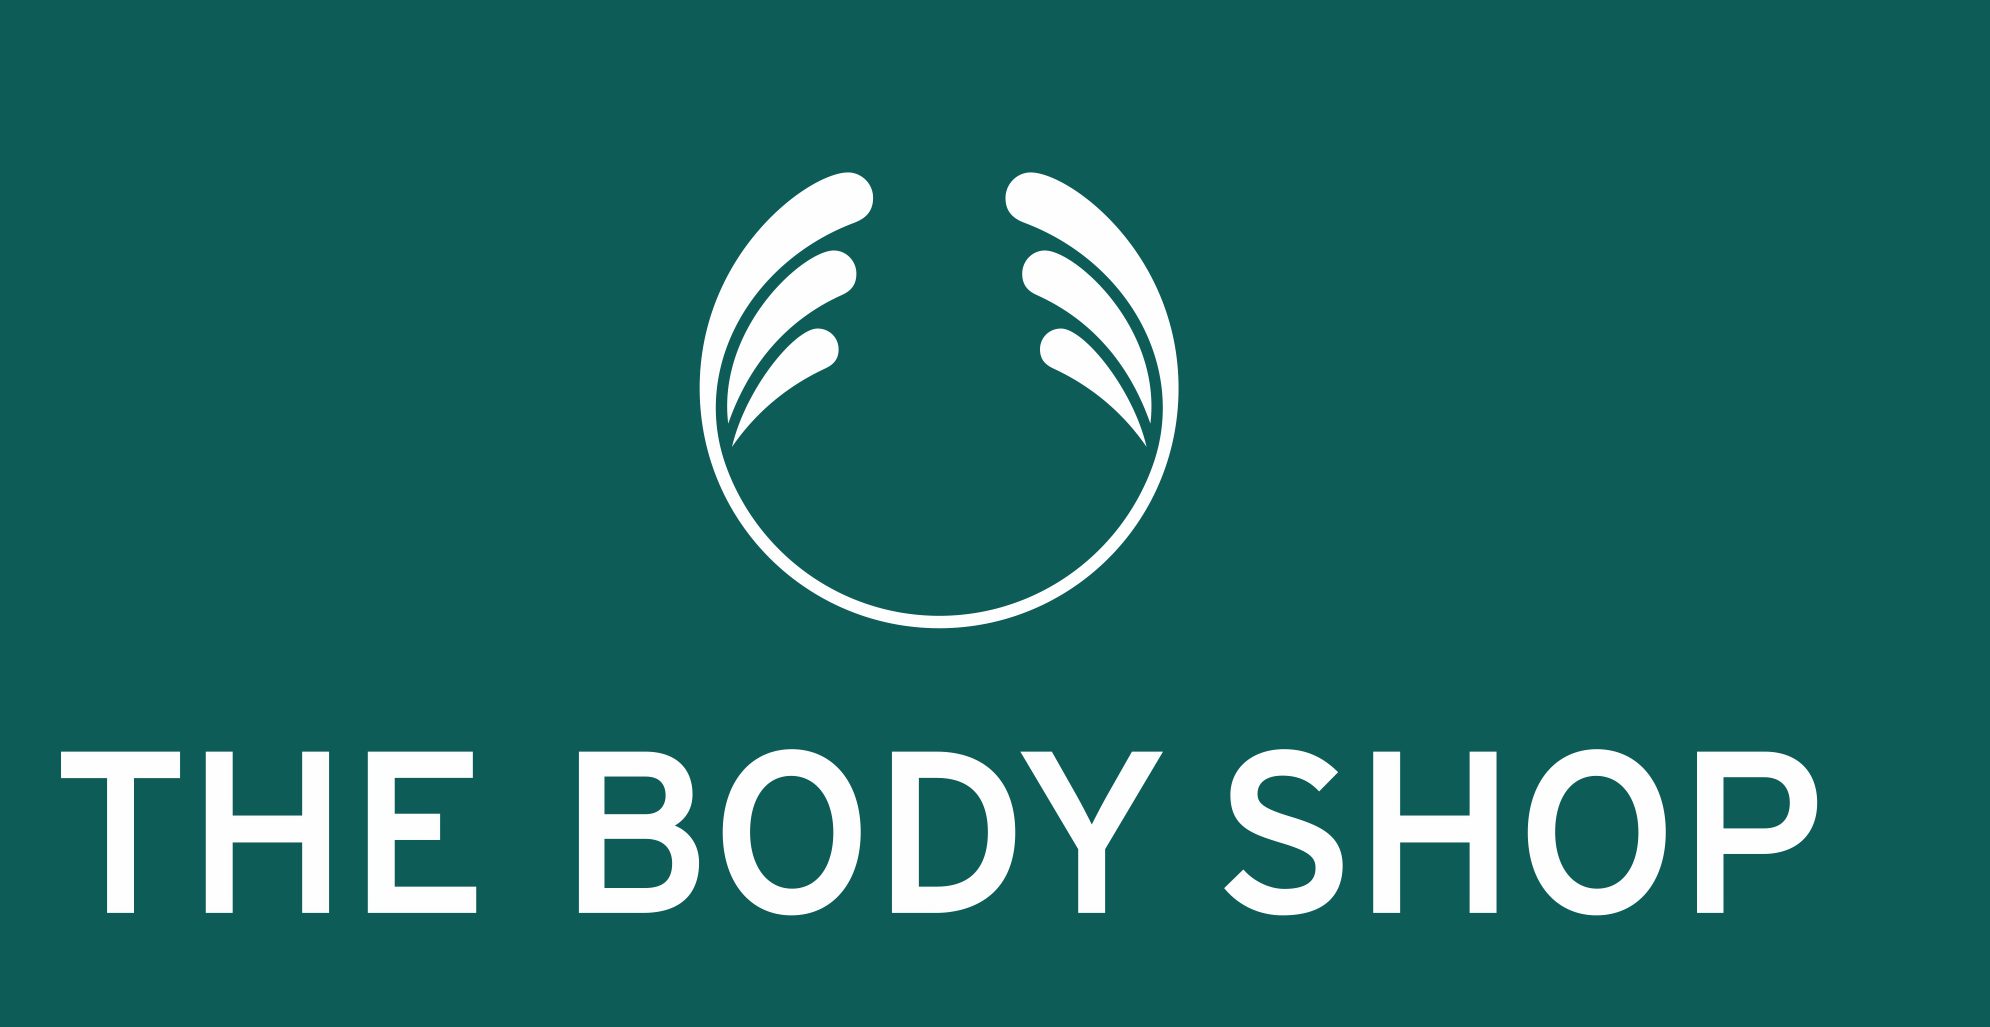 The body shop logo malad